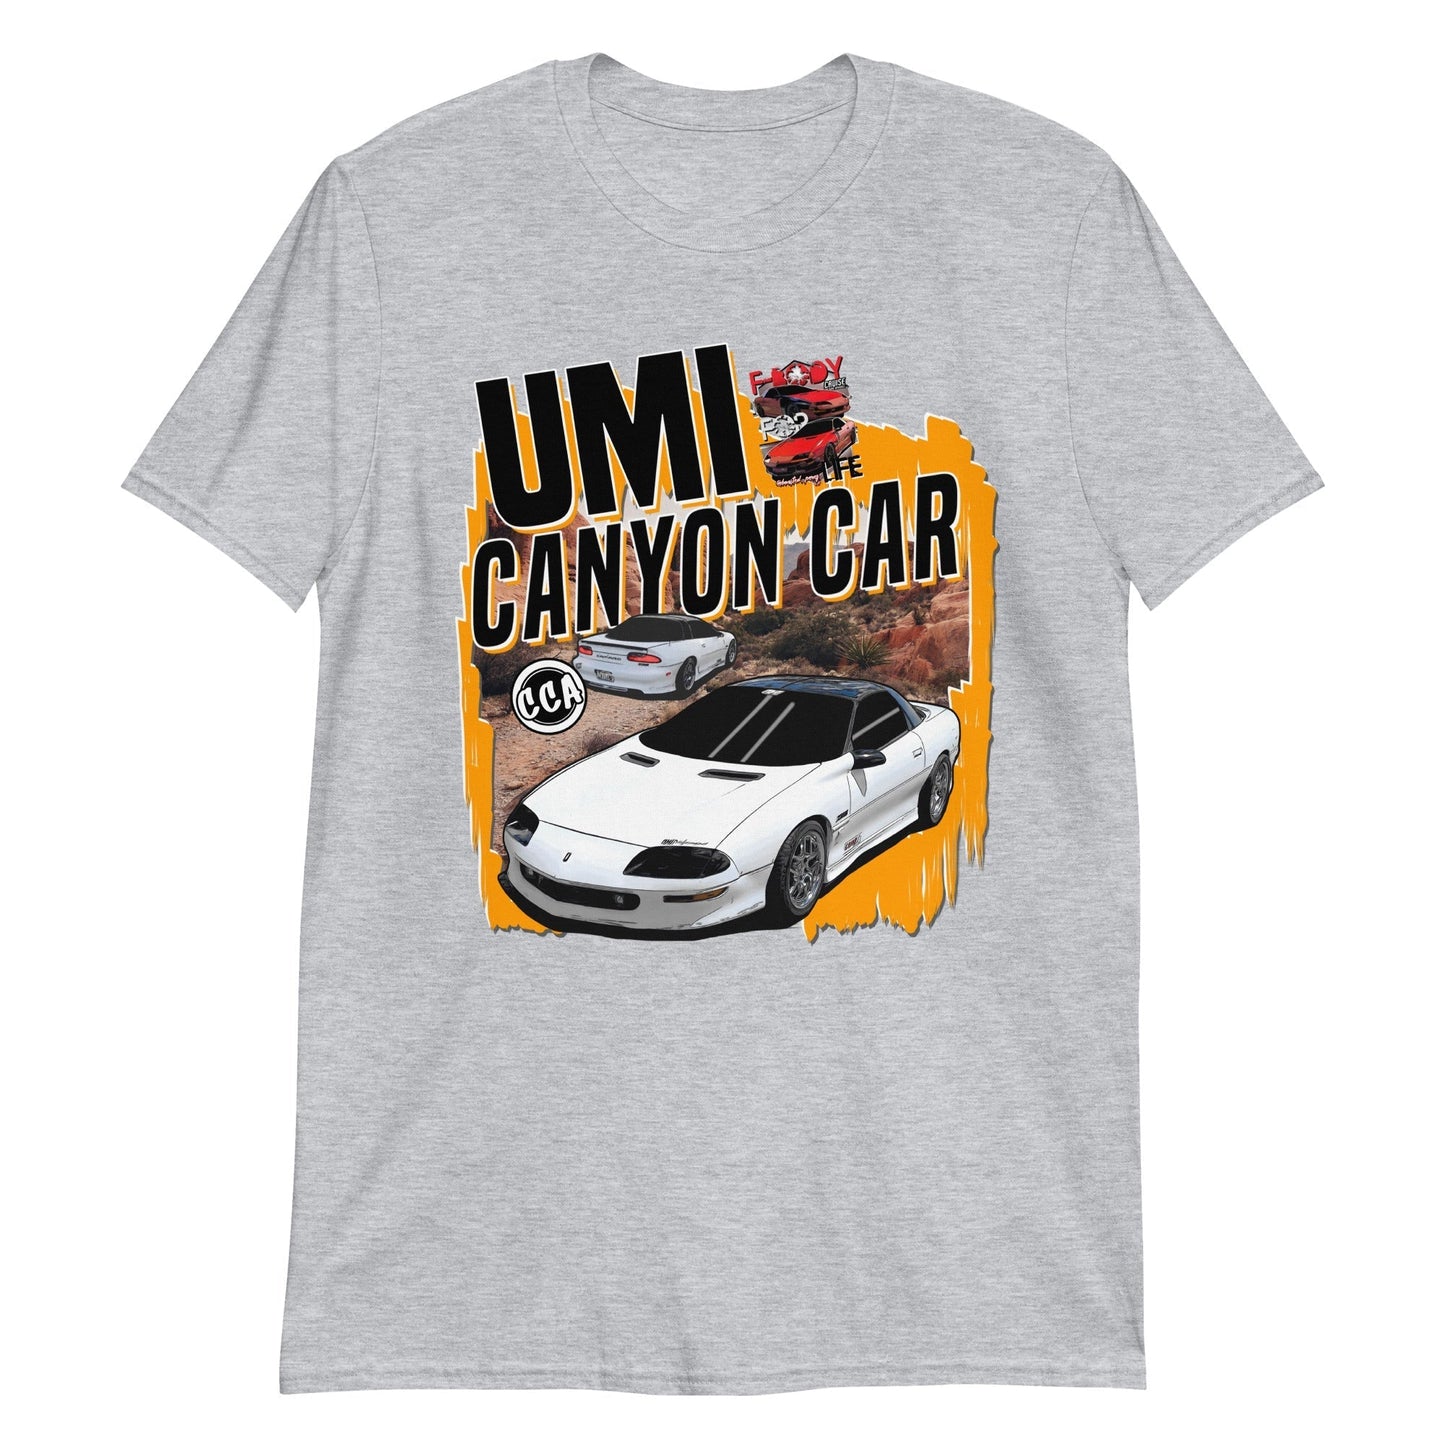 UMI Canyon Car T-Shirt Front